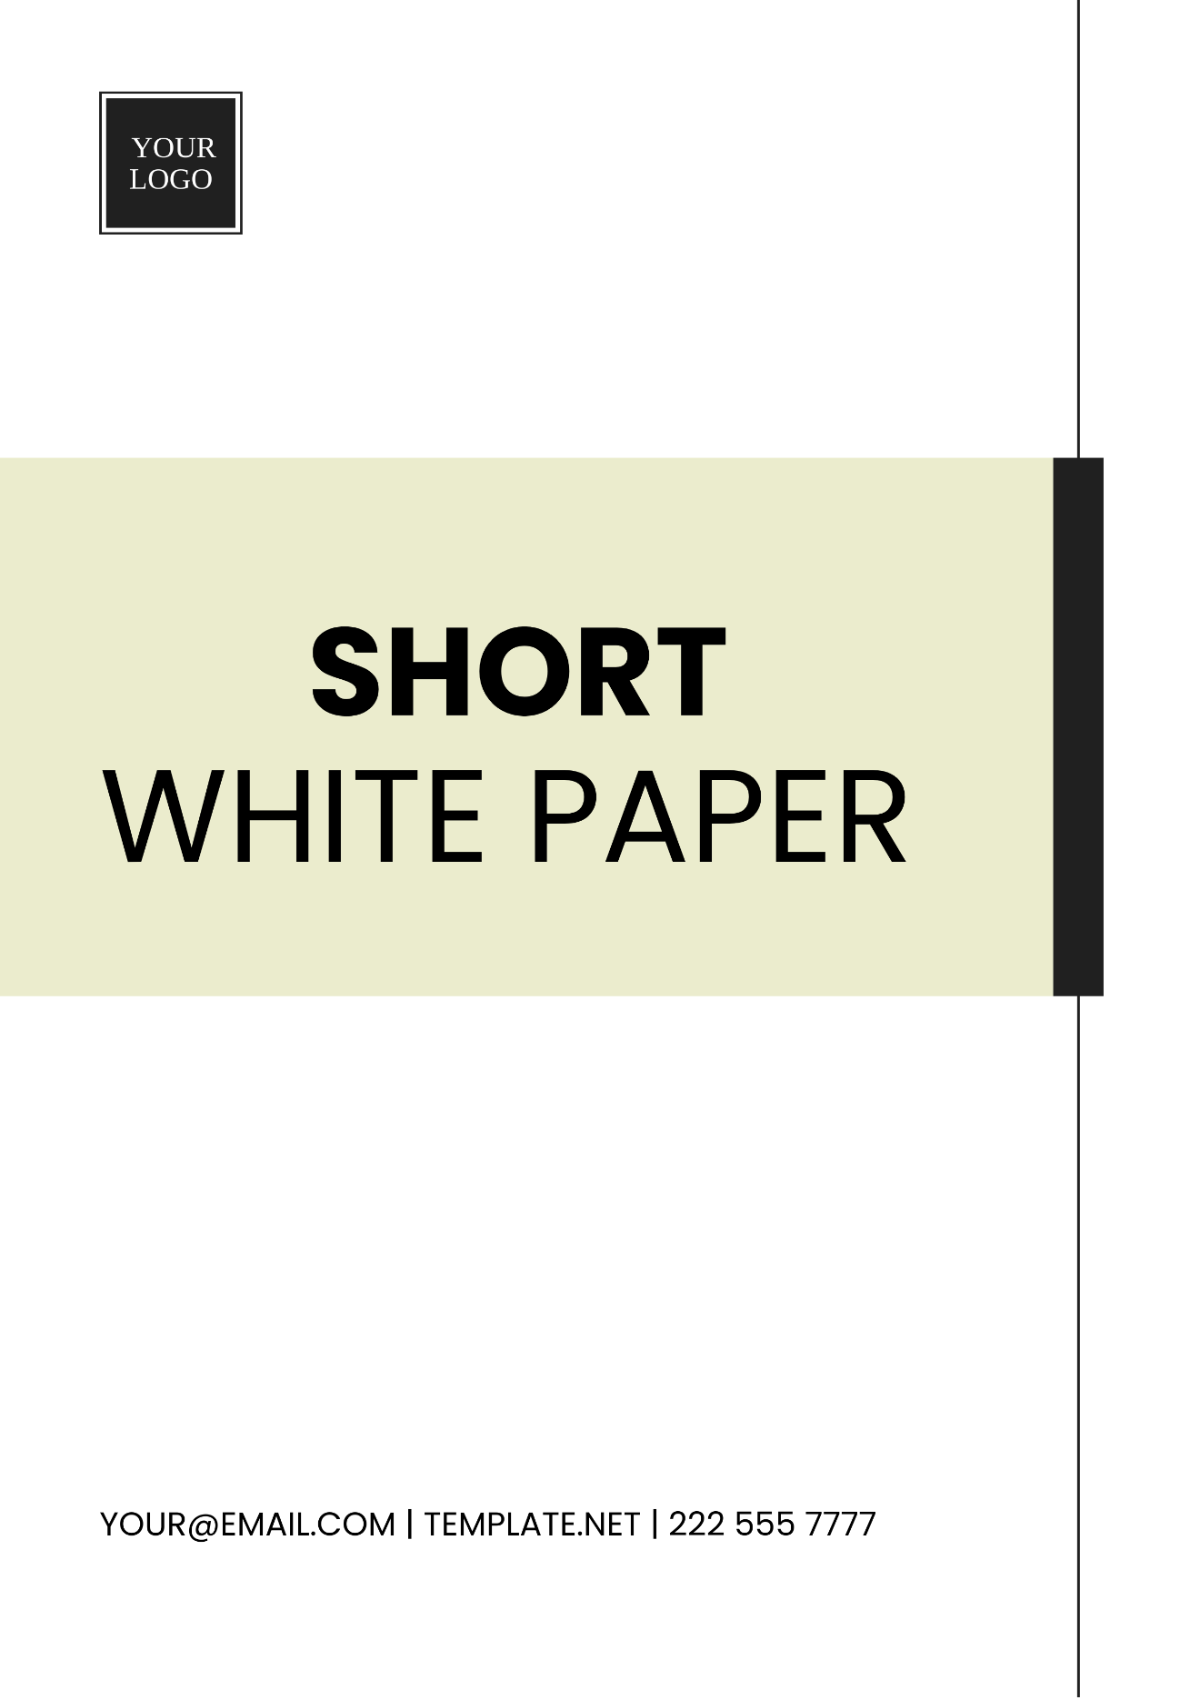 Short White Paper Template